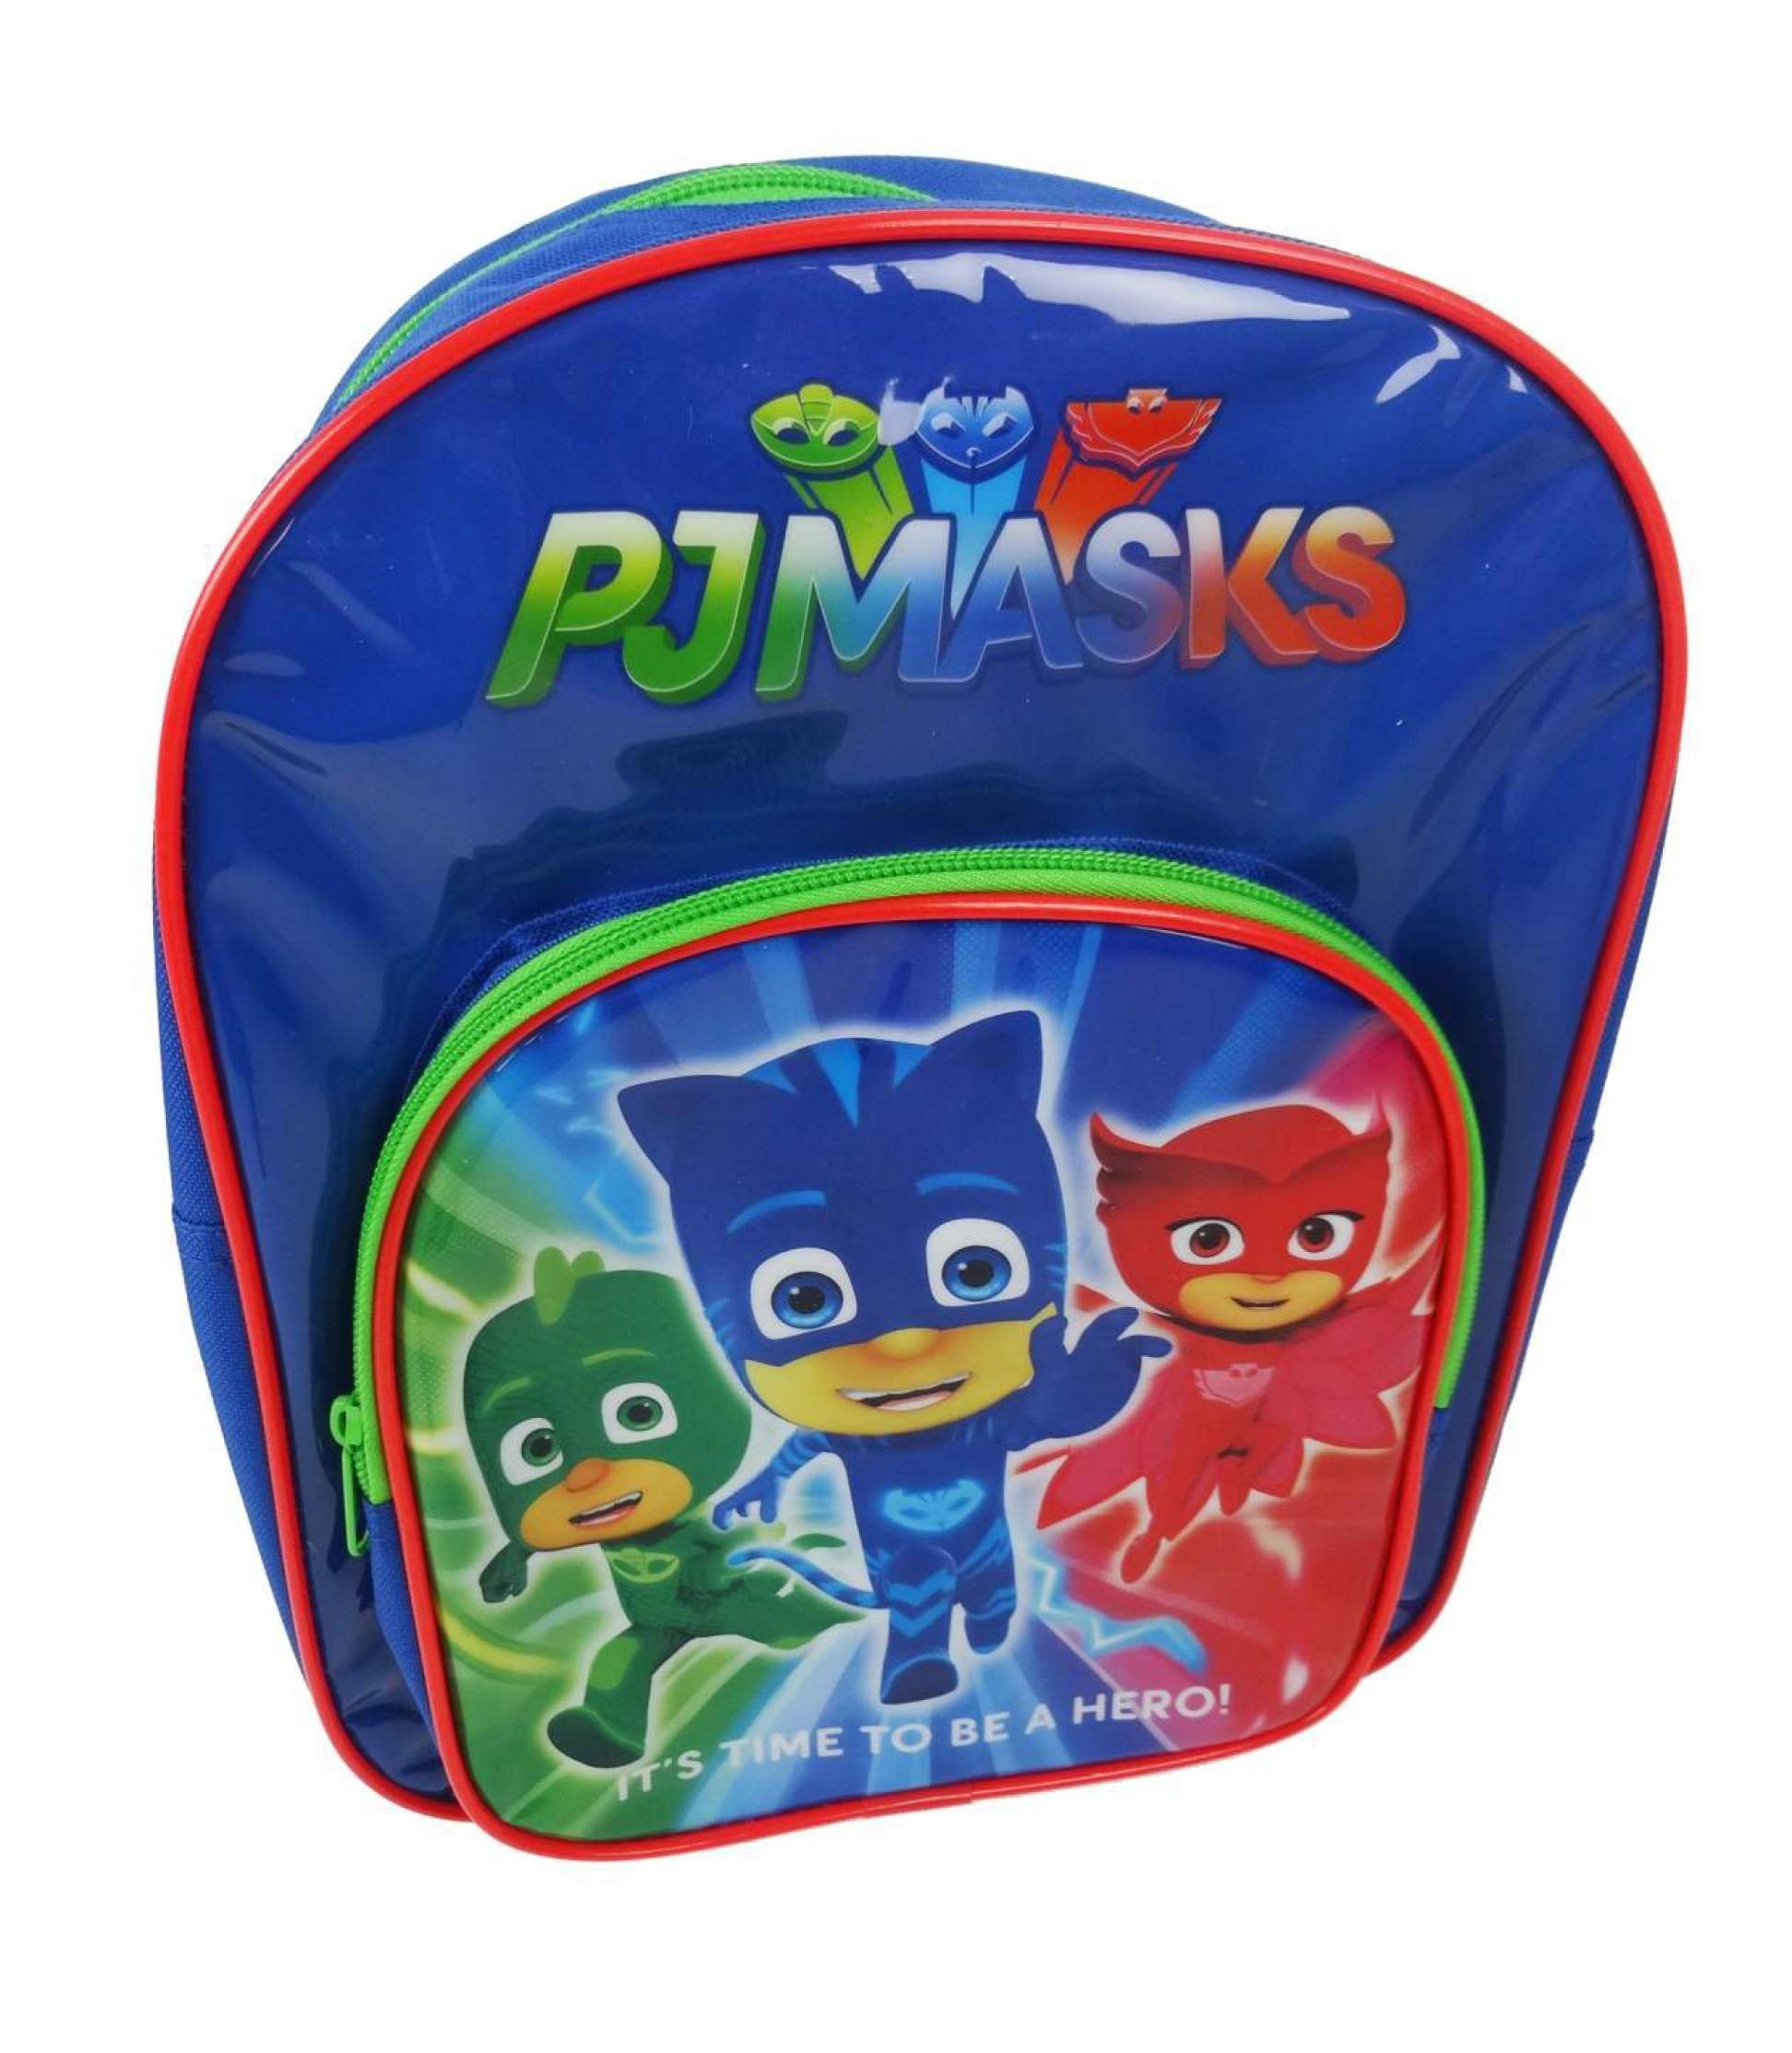 Disney Pj Masks 'It' S Time To Be a Hero' Arch Pocket School Bag Rucksack Backpack